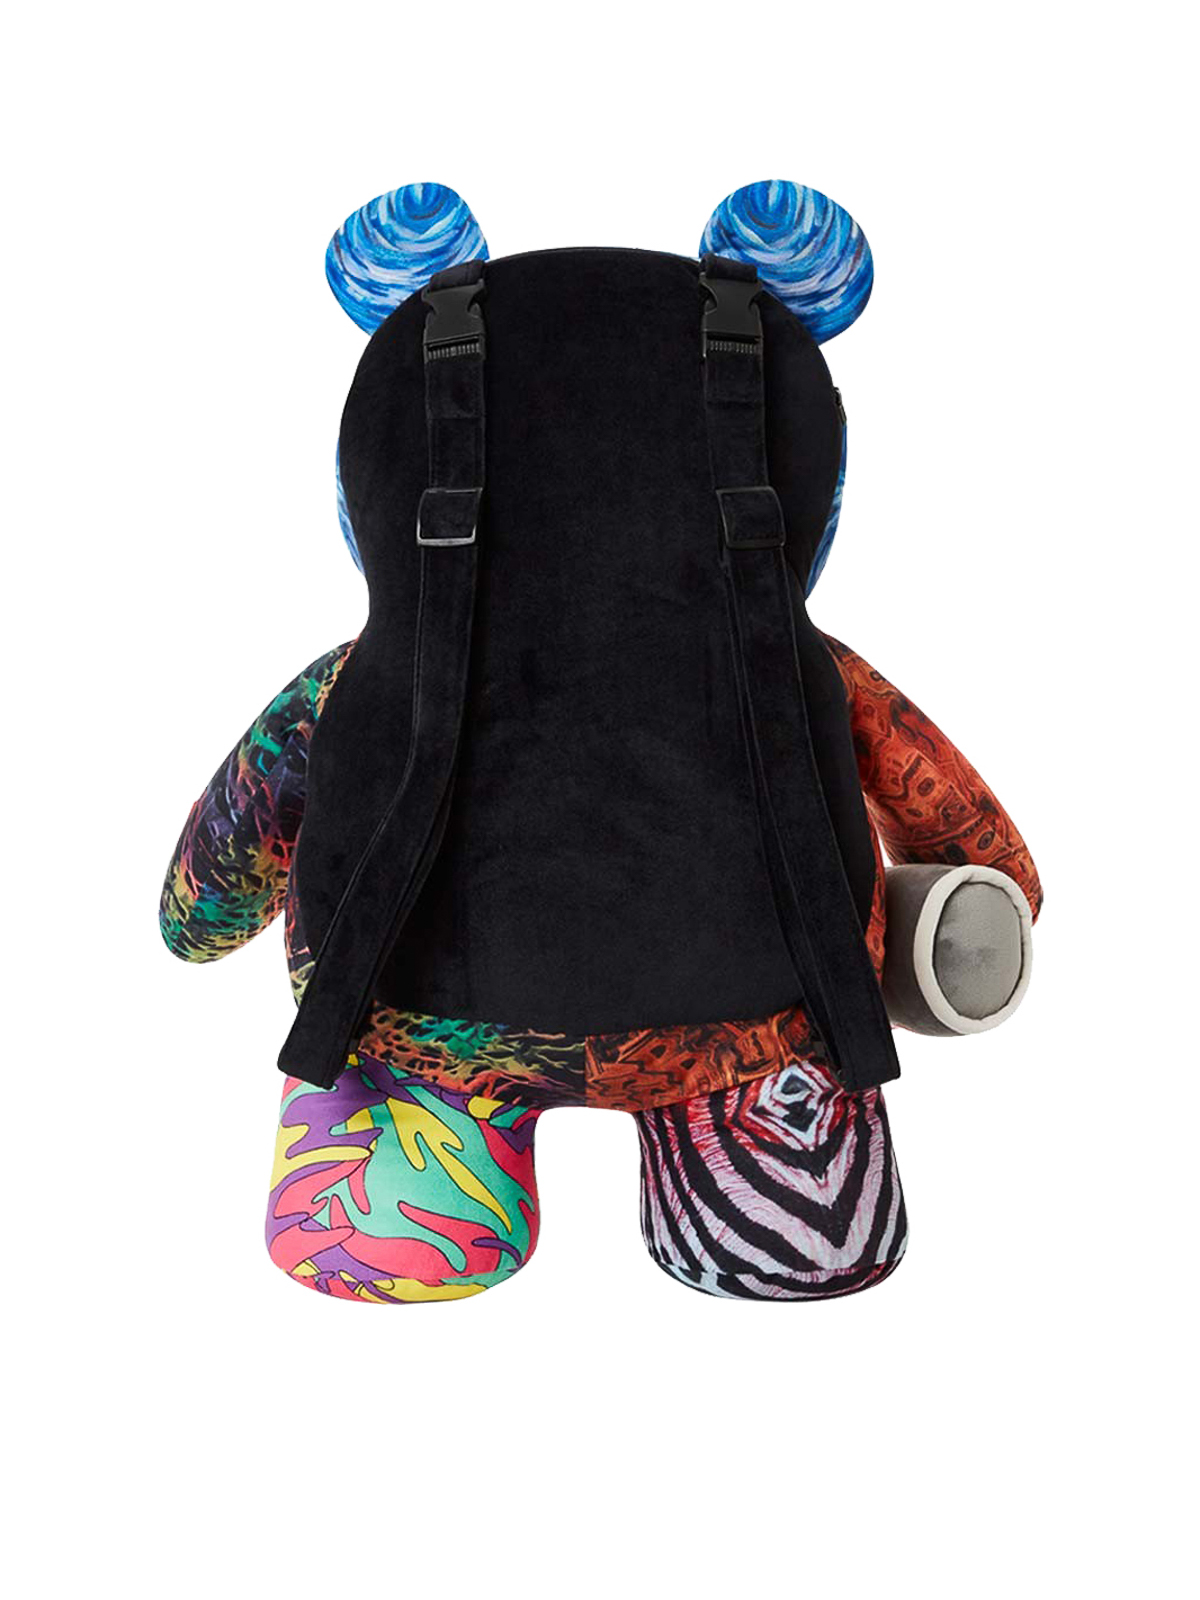 Backpacks Sprayground - Ron english bear backpack - 910B4878NSZMULTICOLOR